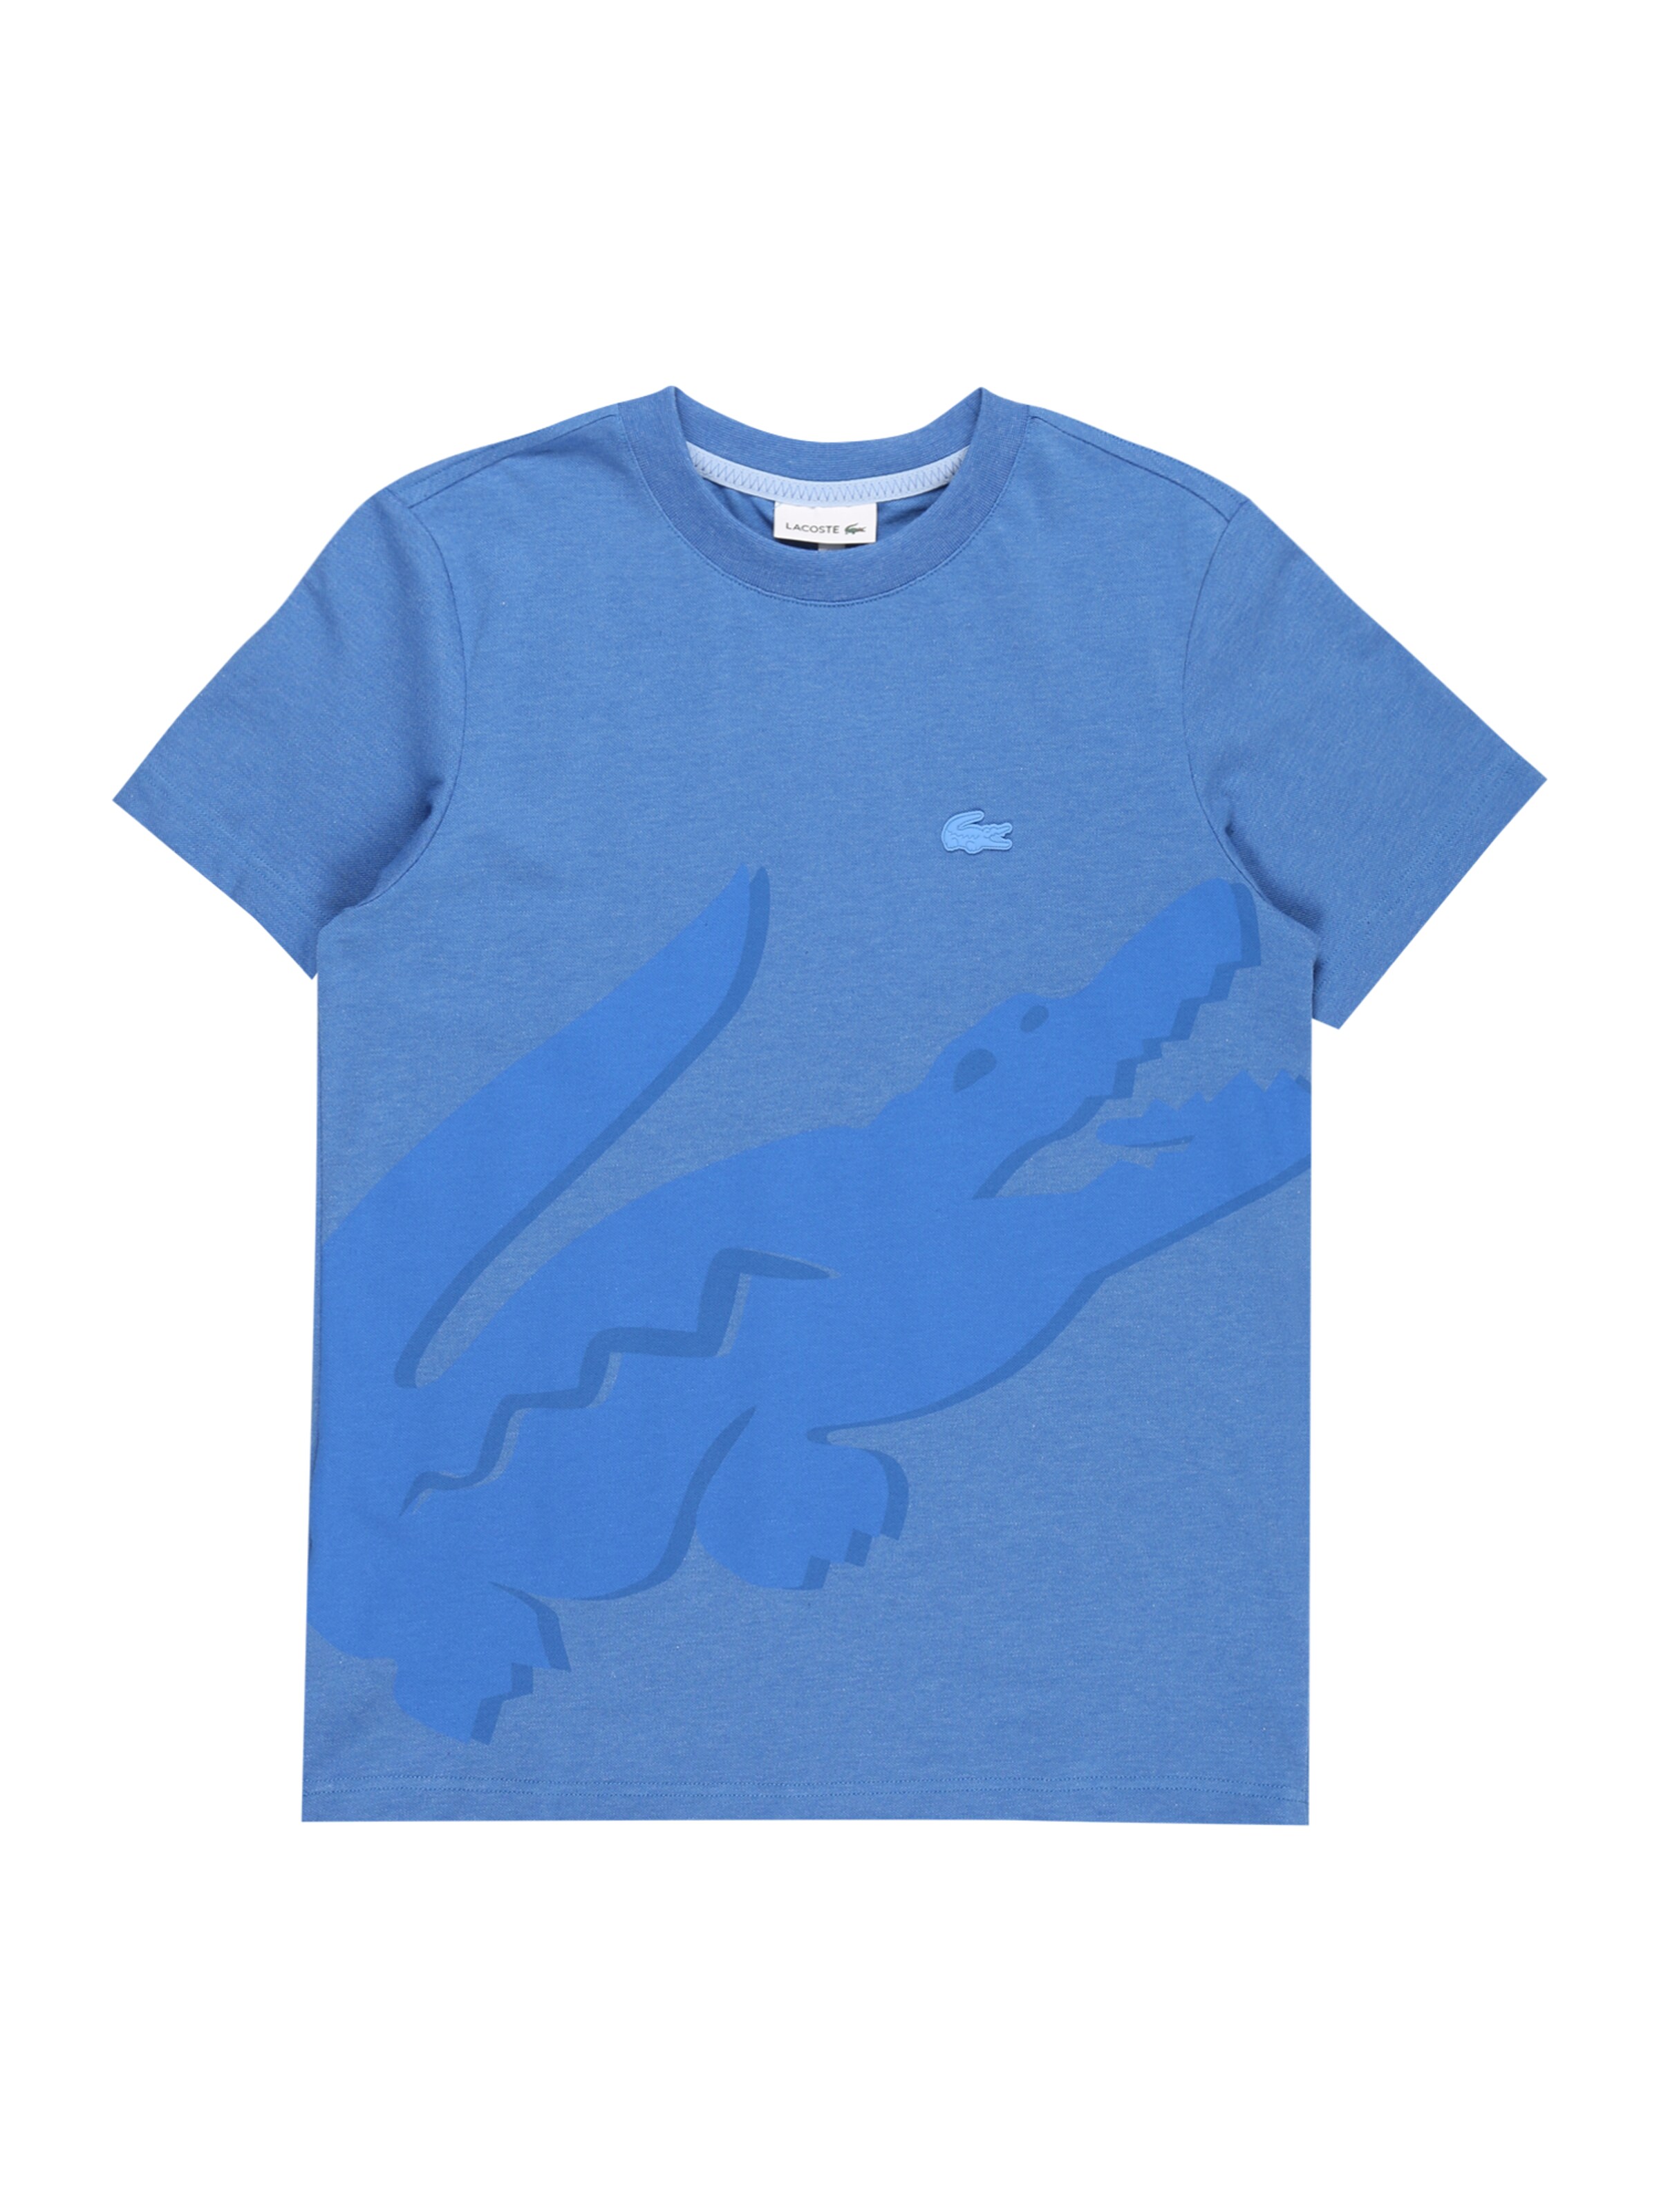 Kinder Teens (Gr. 140-176) LACOSTE T-Shirt in Blau, Royalblau, Blaumeliert - OX59568